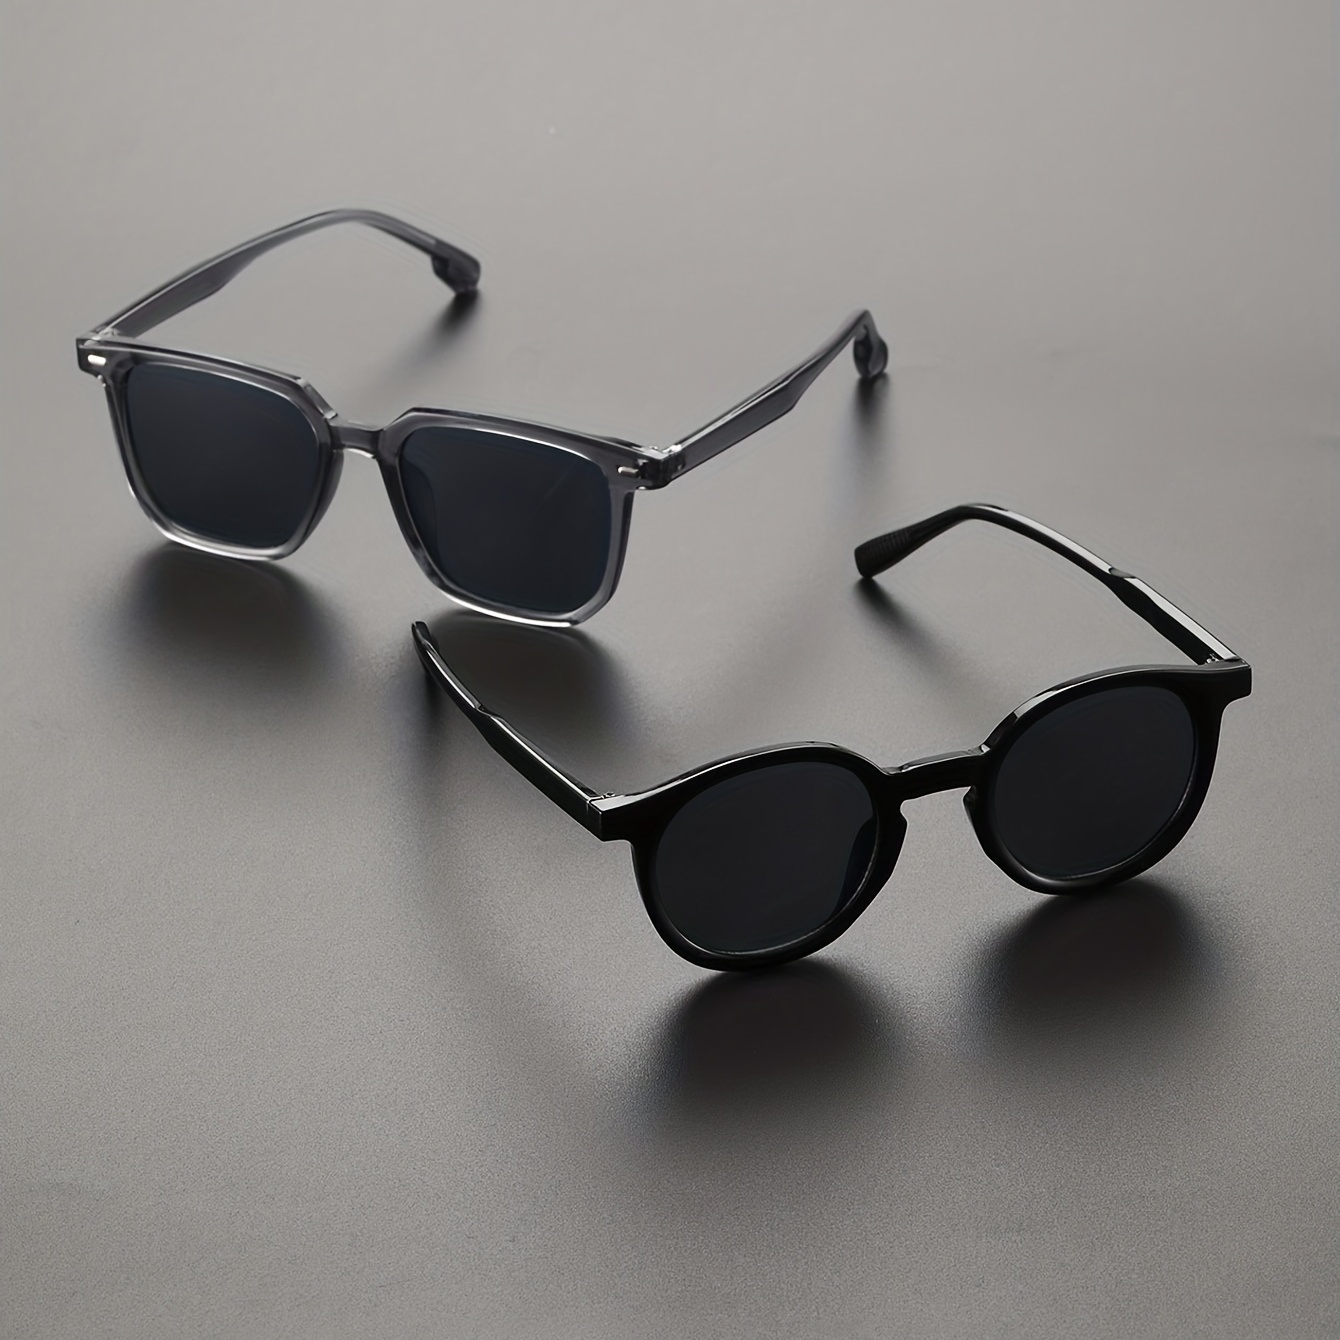 2 Pairs Men's Black Versatile Classic Casual PC Square Frame with Black Glasses Case Sun Glasses,Goggles,Y2k,Eye Glasses,Eyeglasses,Steampunk